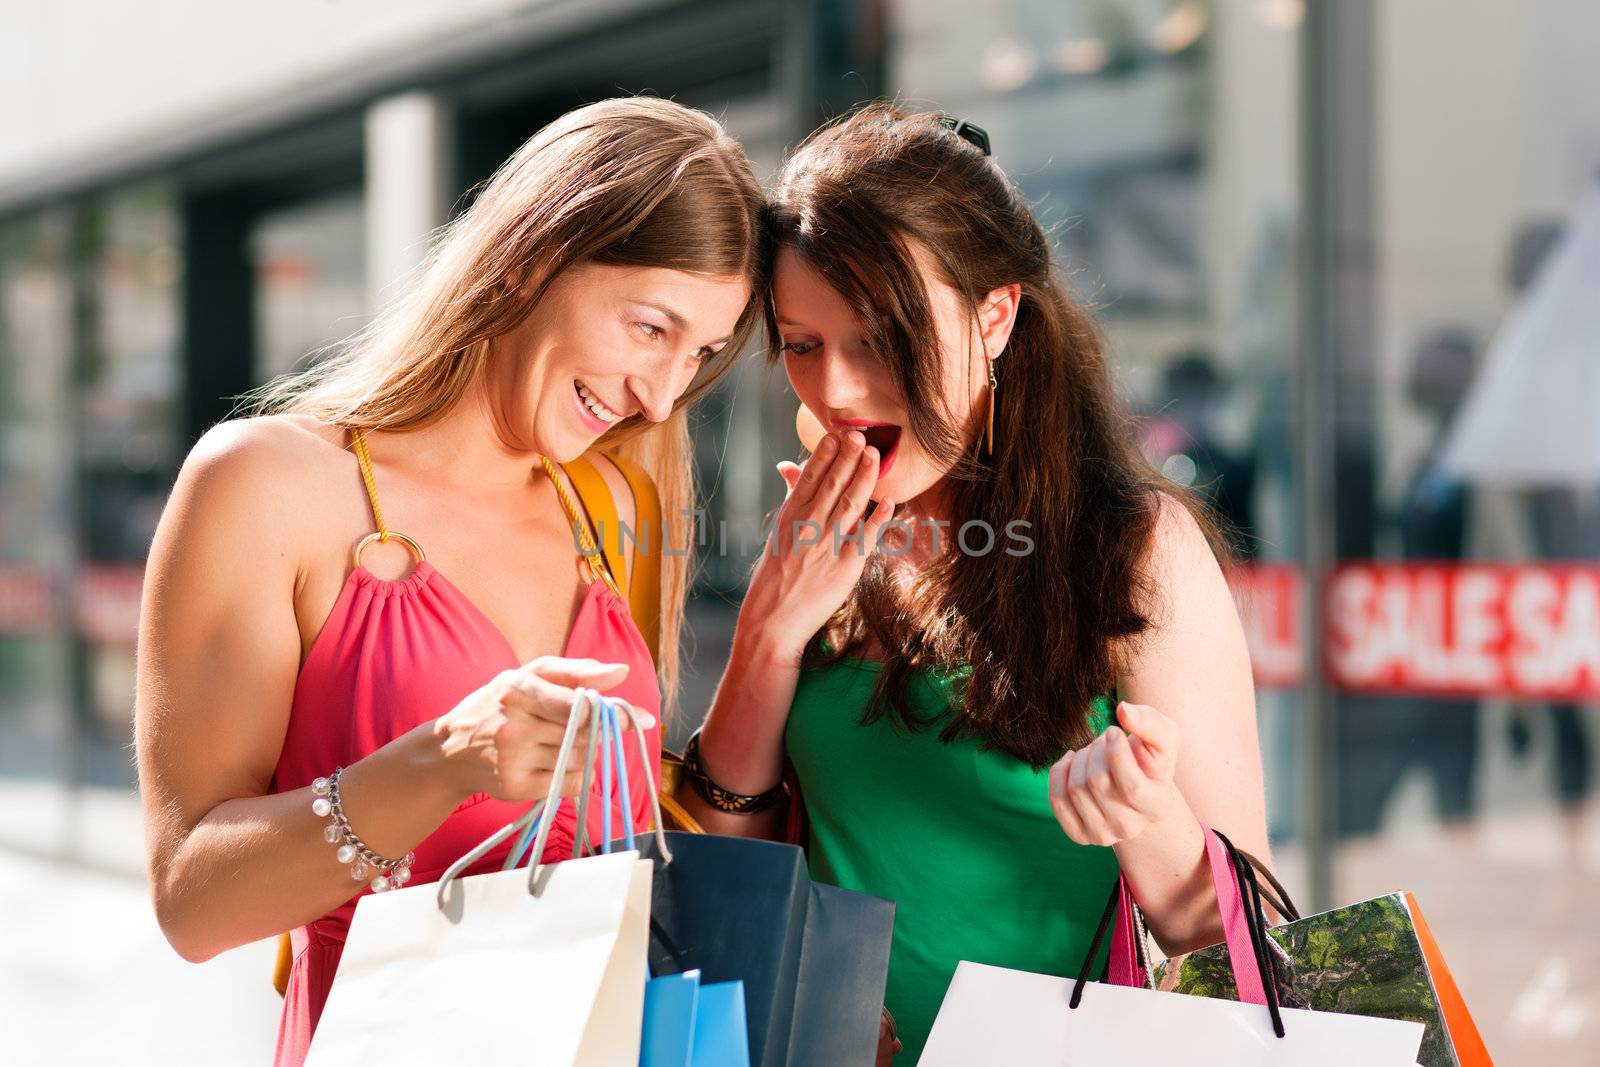 women downtown shopping with bags by Kzenon